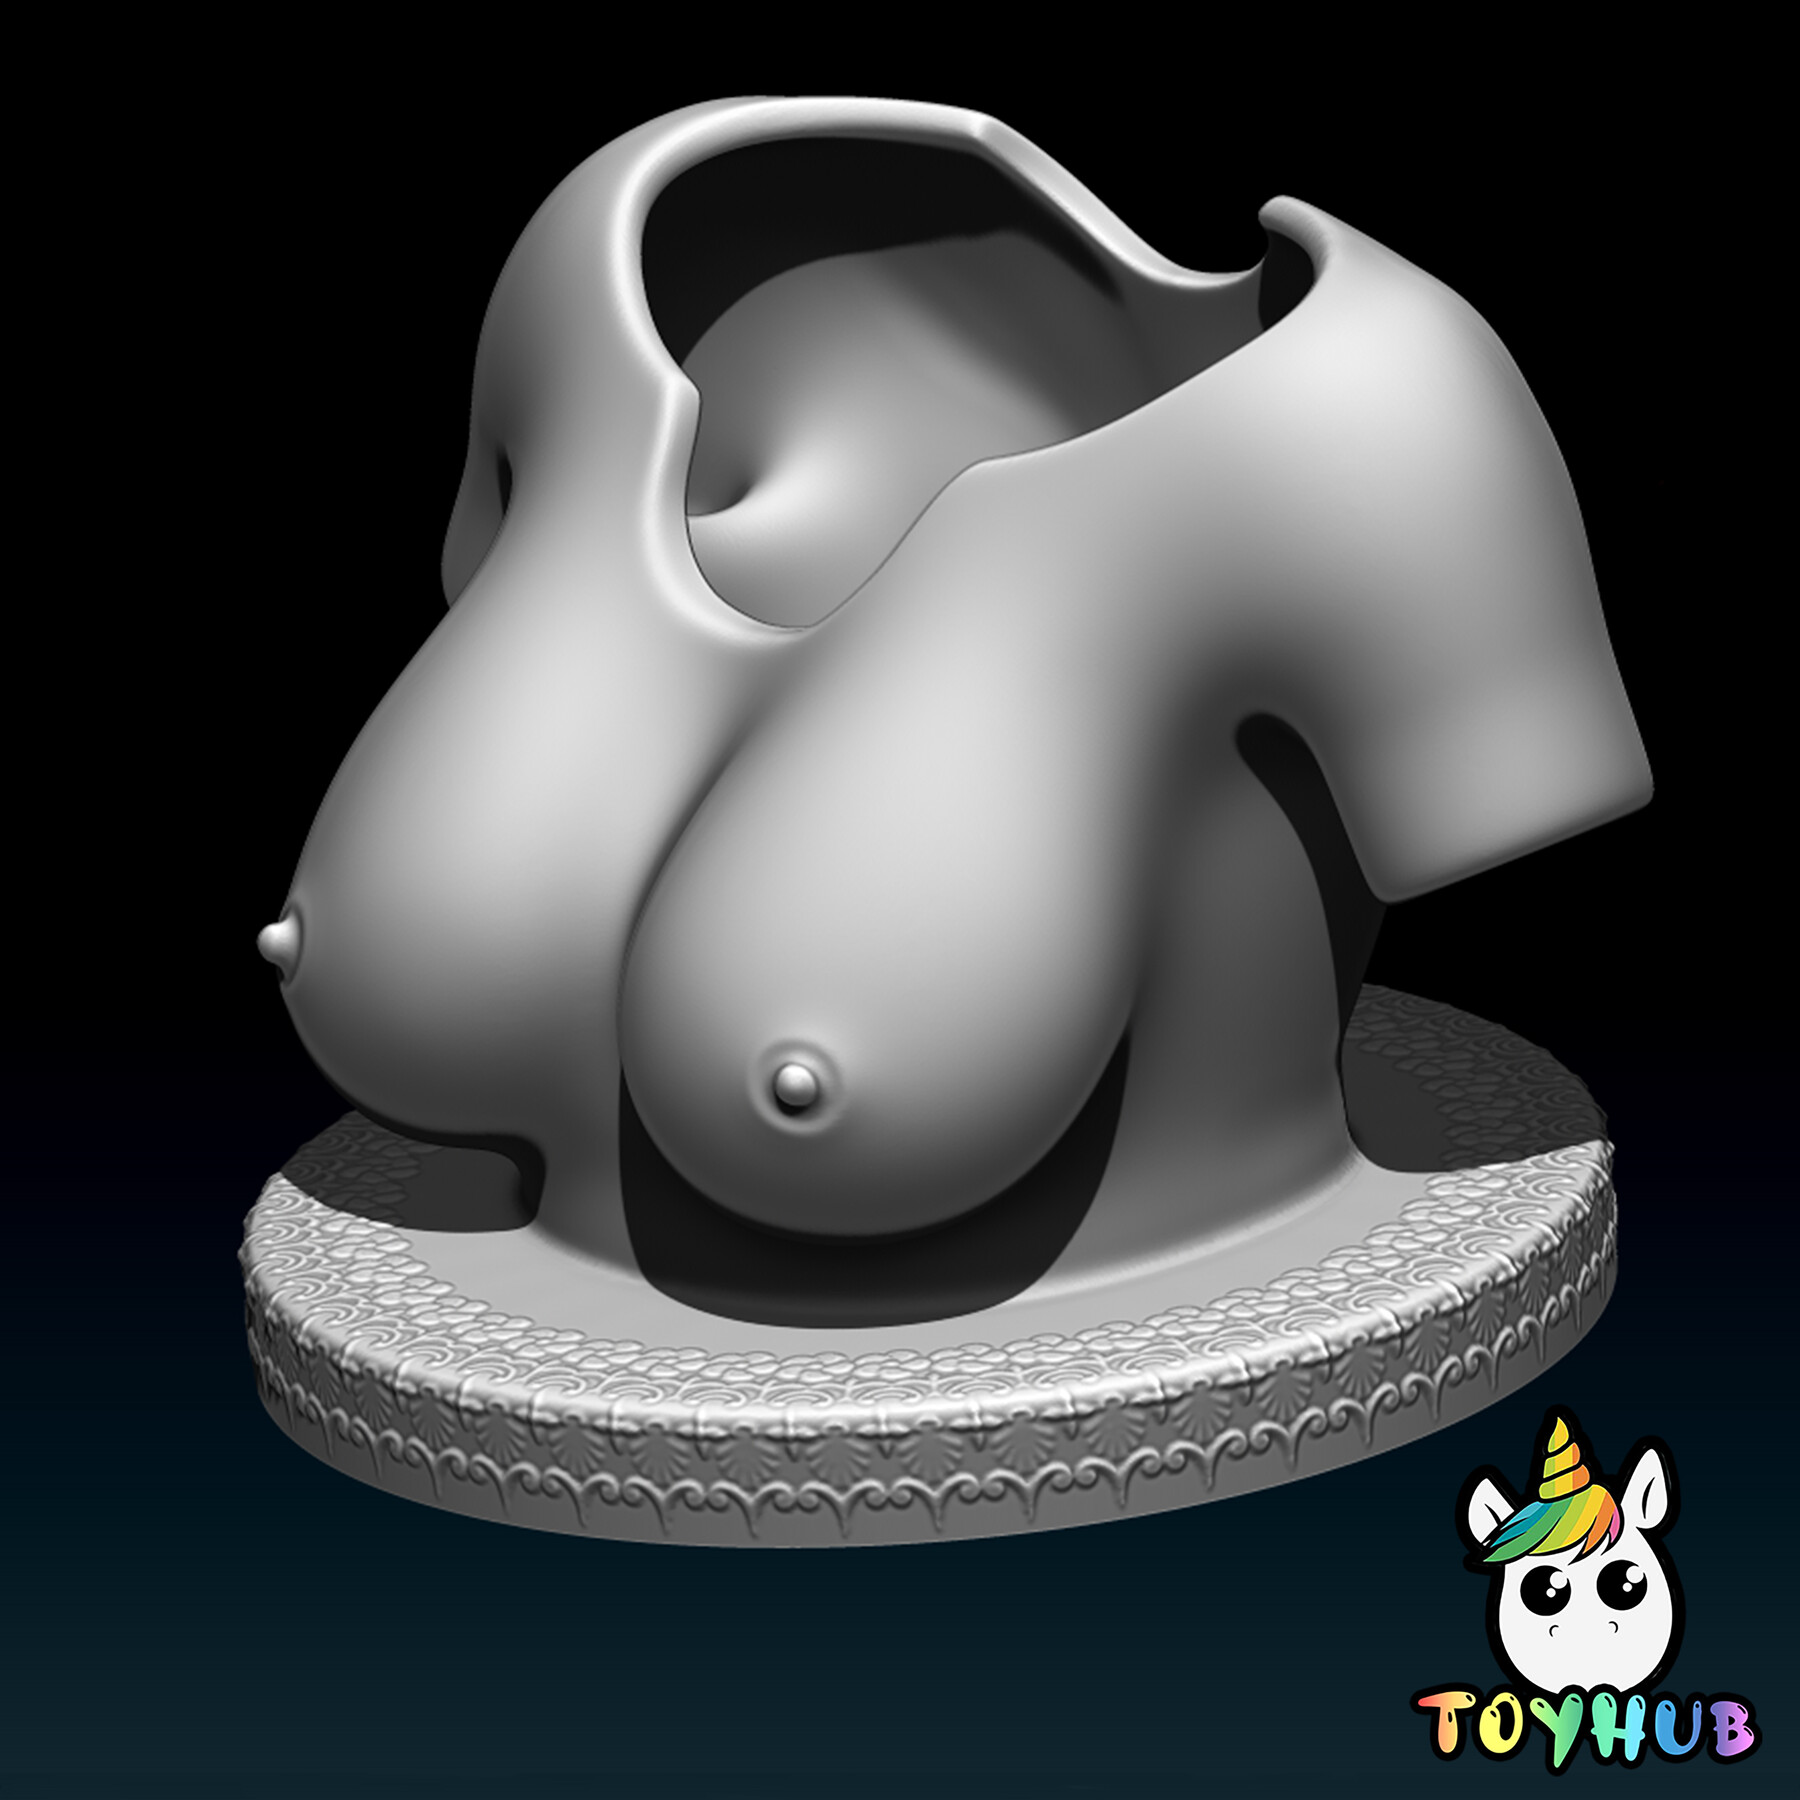 3D Printed Total Recall Triple Boobs Bust Statue Desk Ornament